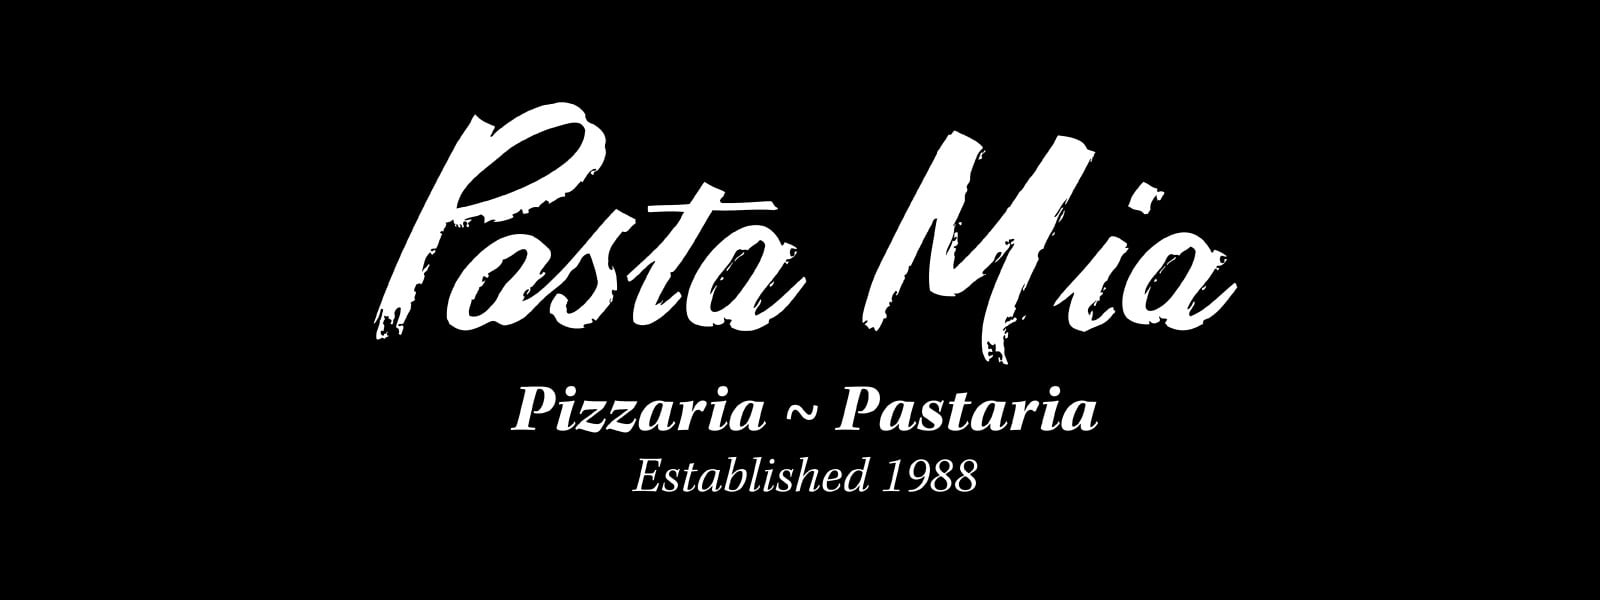 Pasta-Mia-header